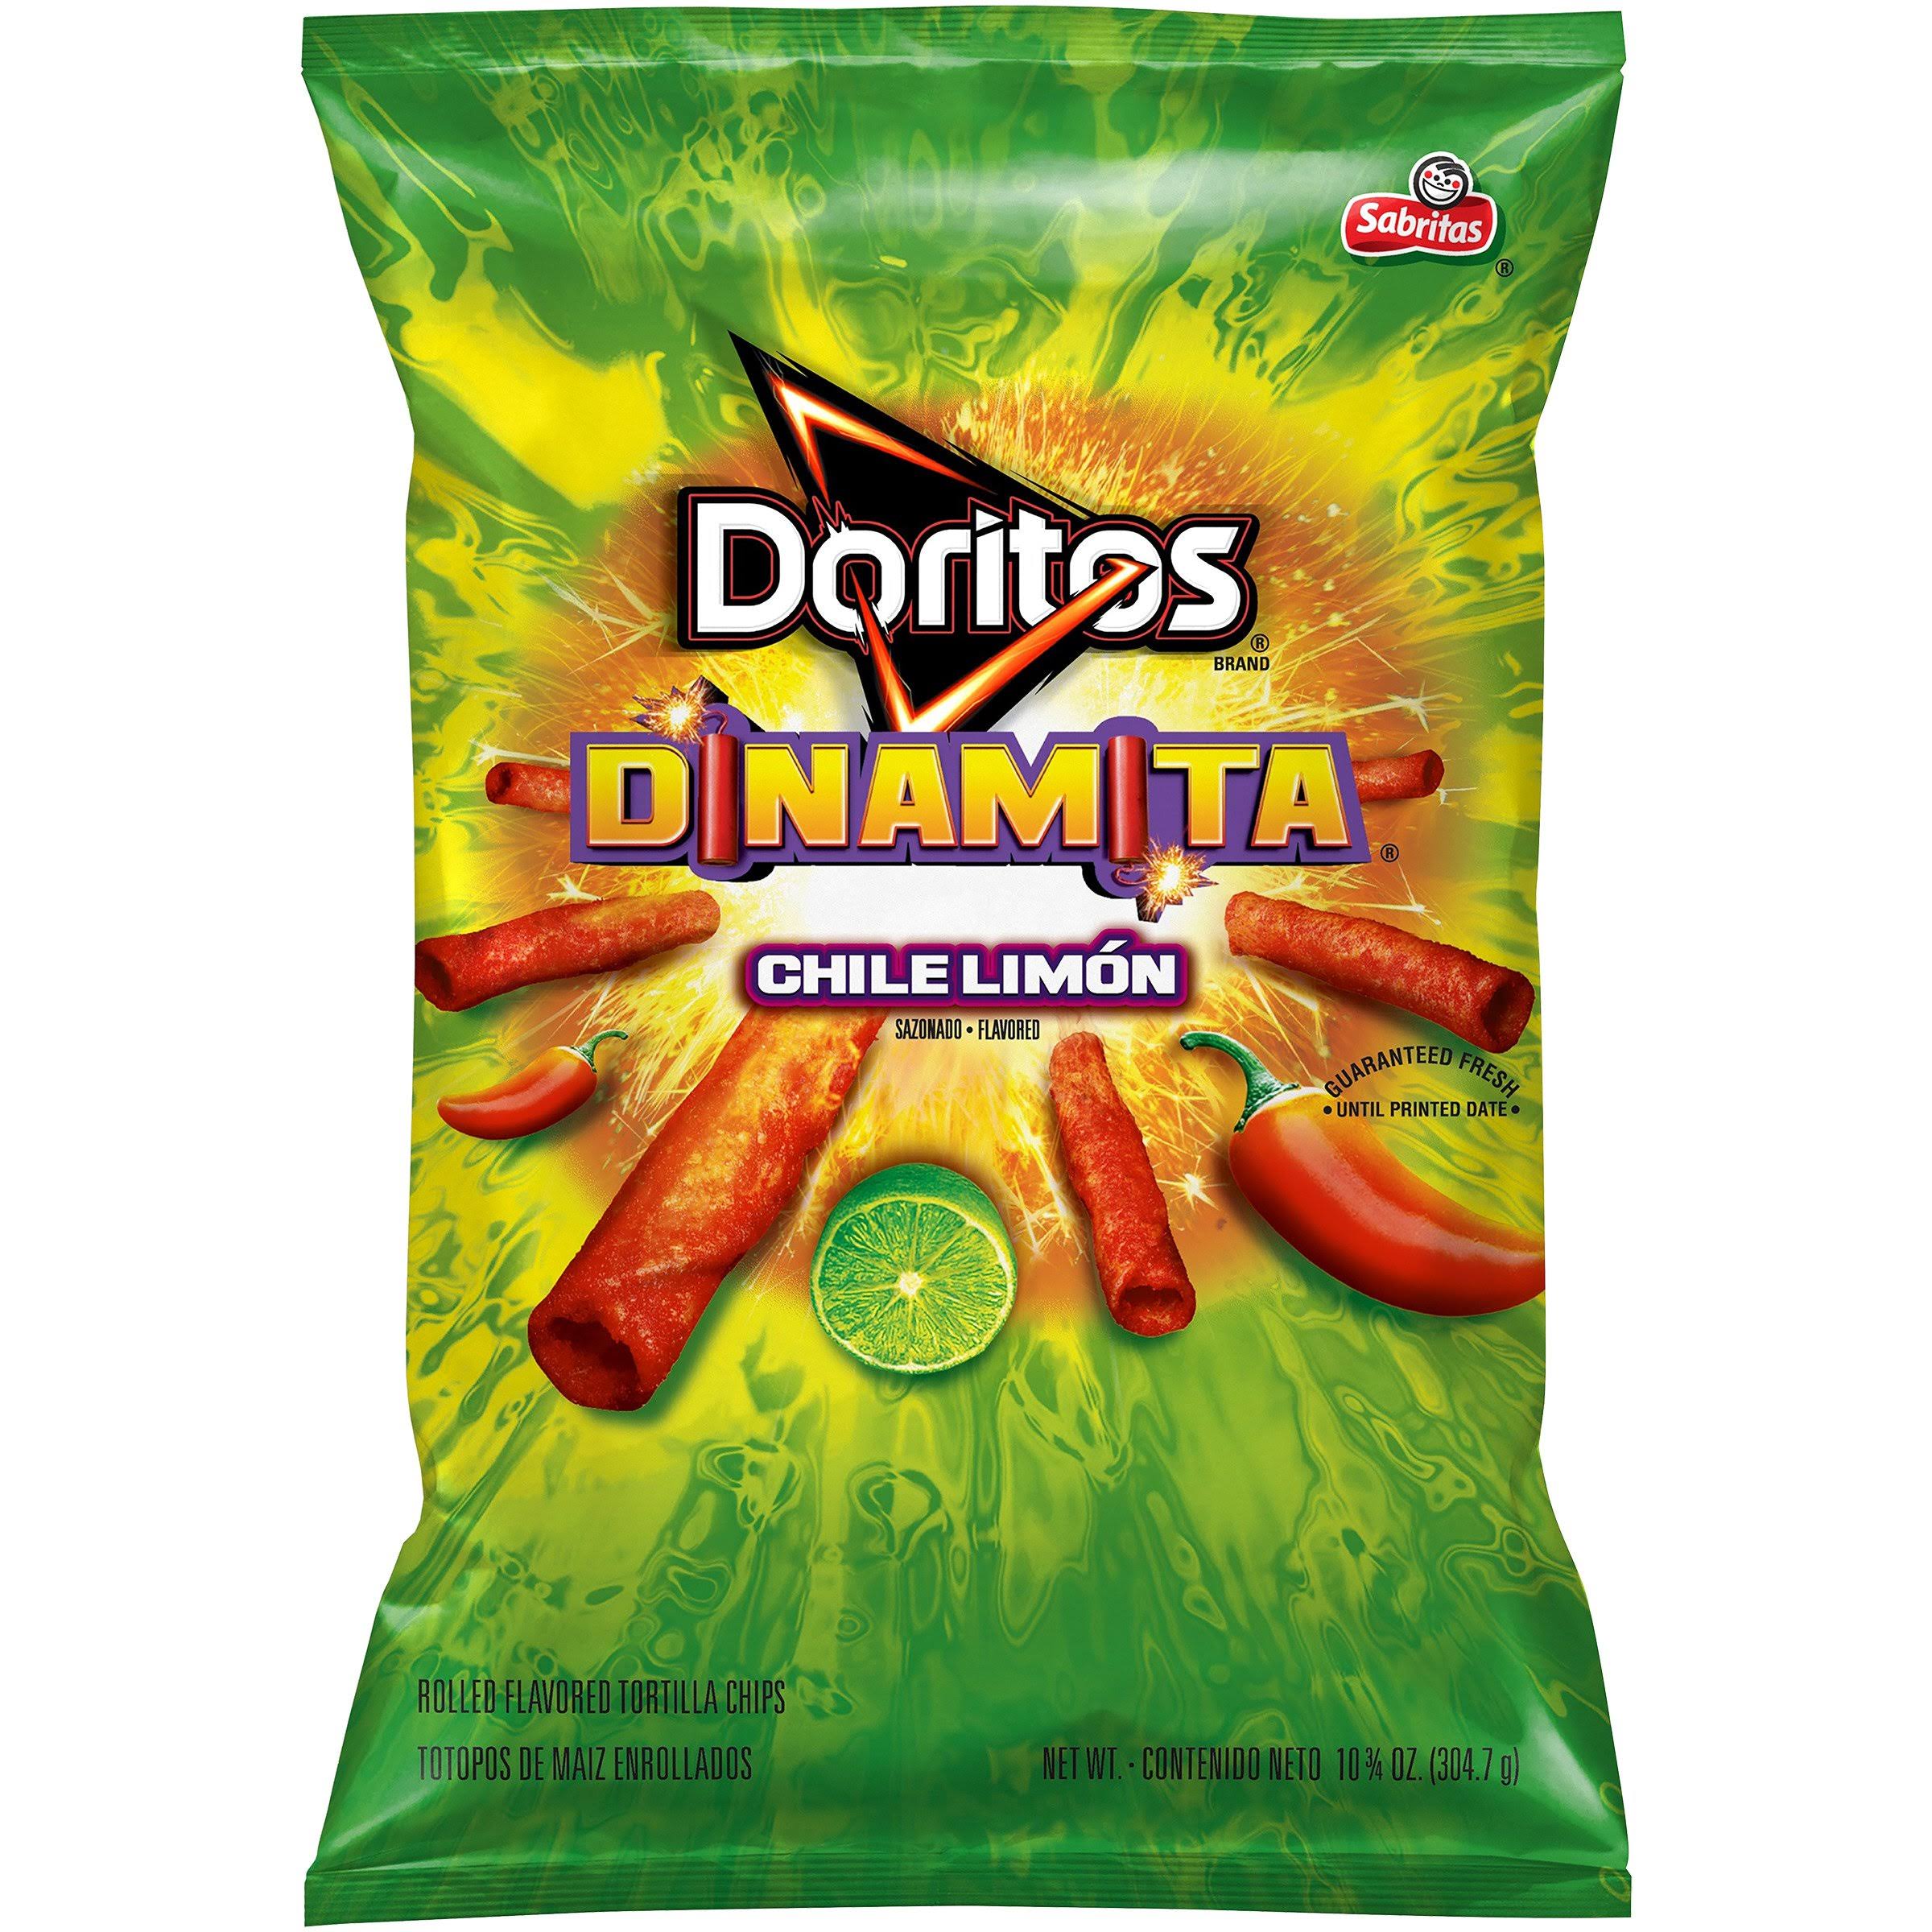 Doritos Tortilla Chips Dinamita Chile Limon Bag, Chili Lemon, 10.75 Ou